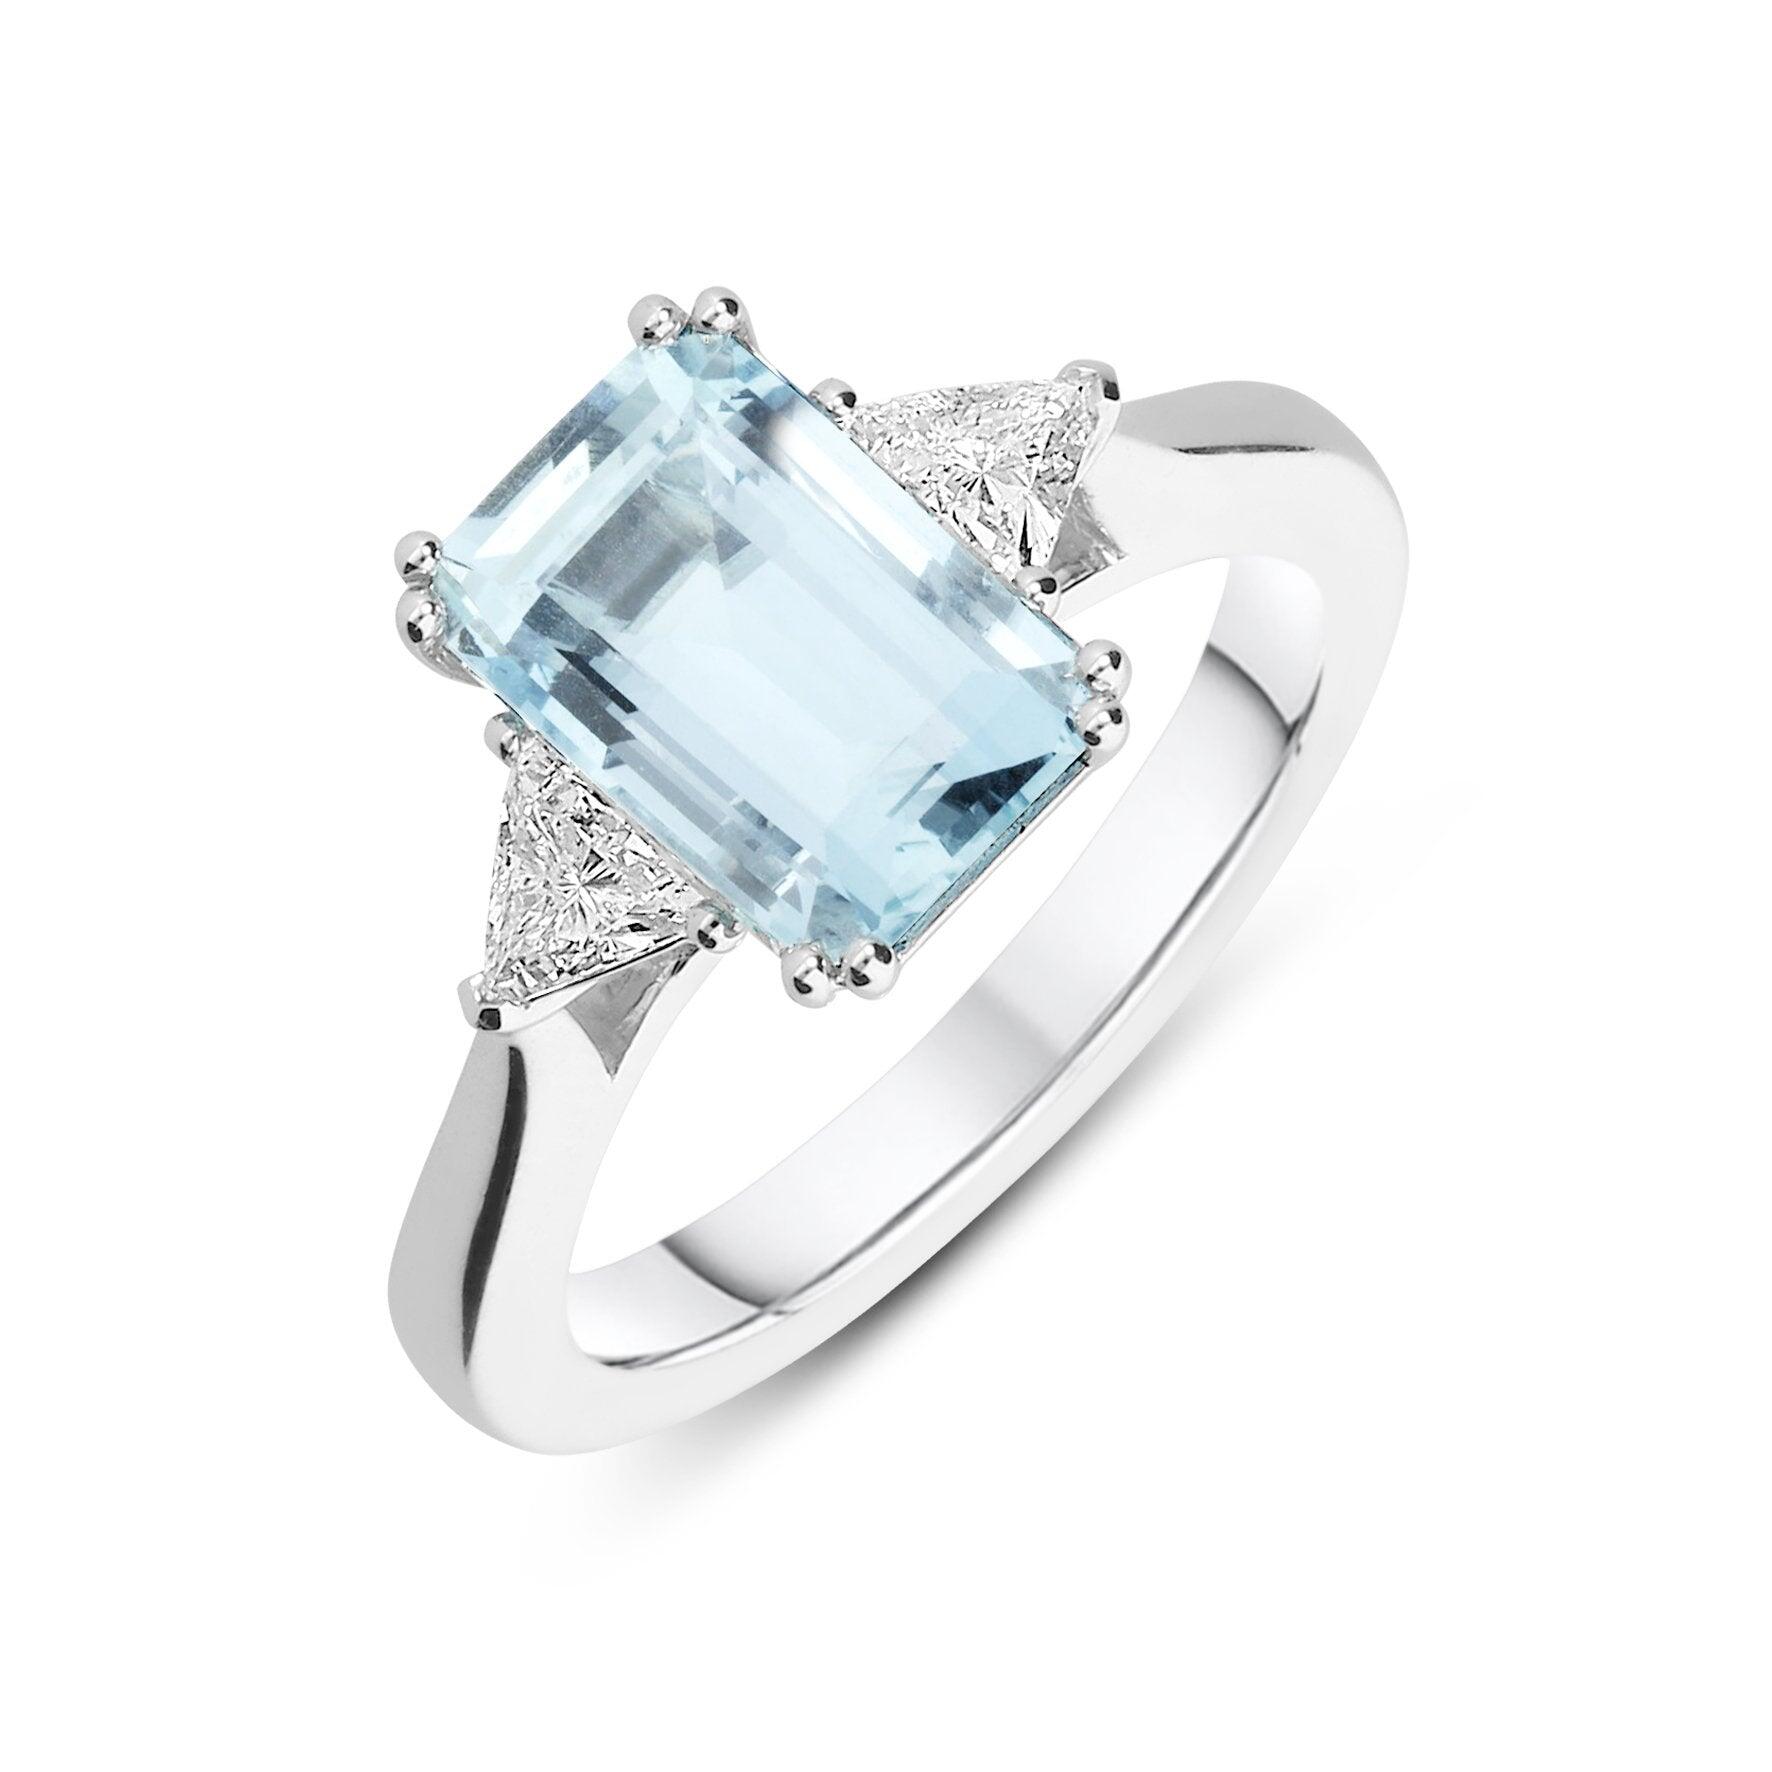 18ct White Gold 2.22ct Aquamarine Diamond Emerald Cut Ring - Option1 Value / White Gold